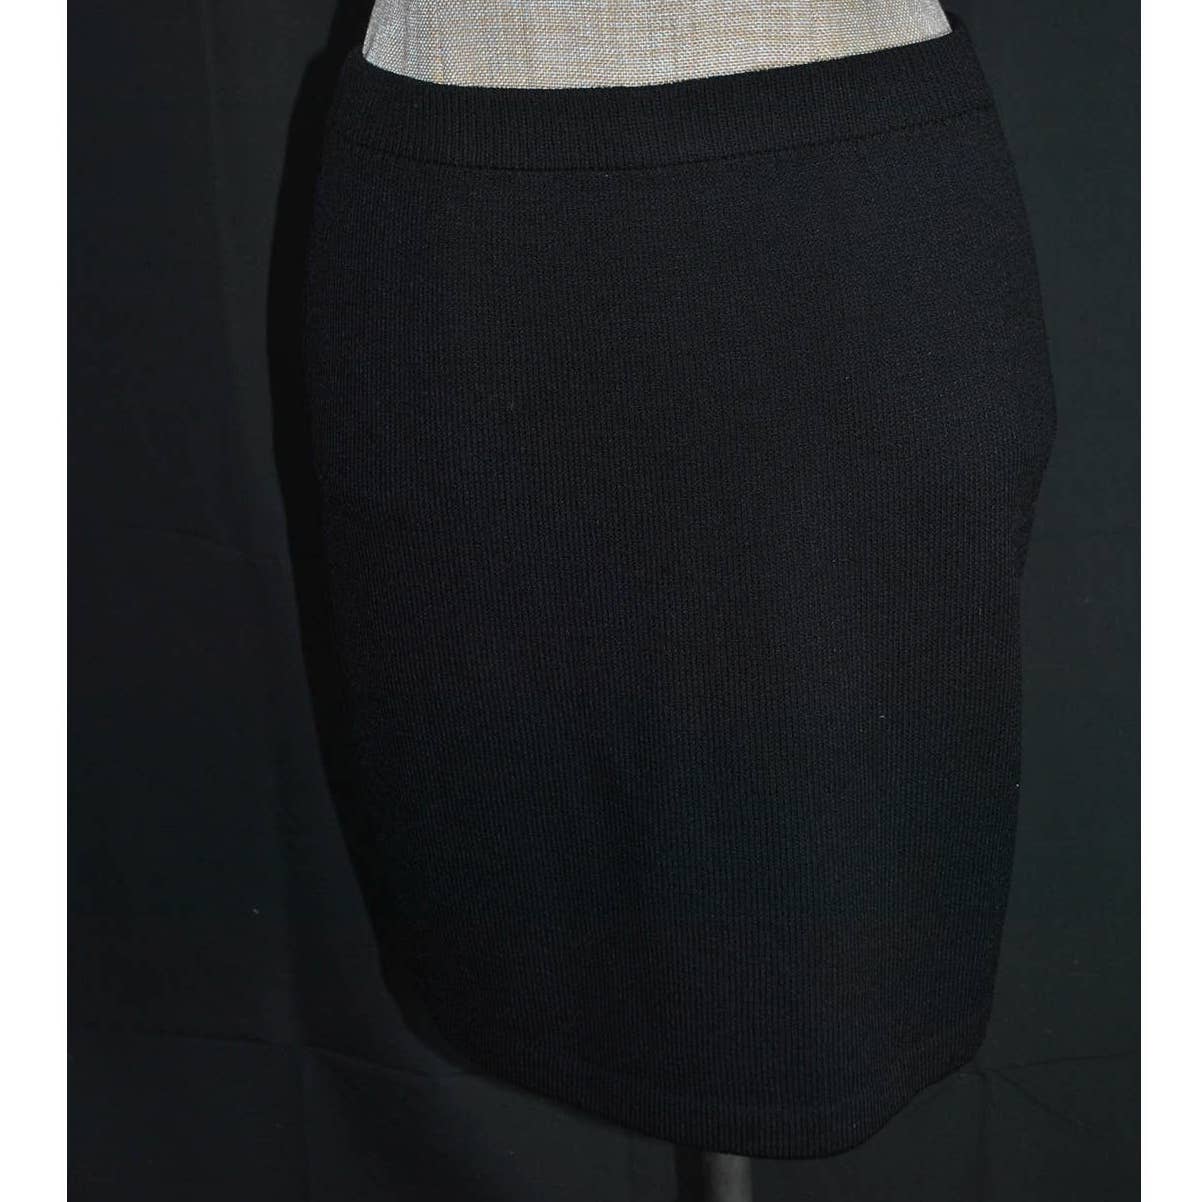 St. John Basics Black Knit Midi Skirt- 2